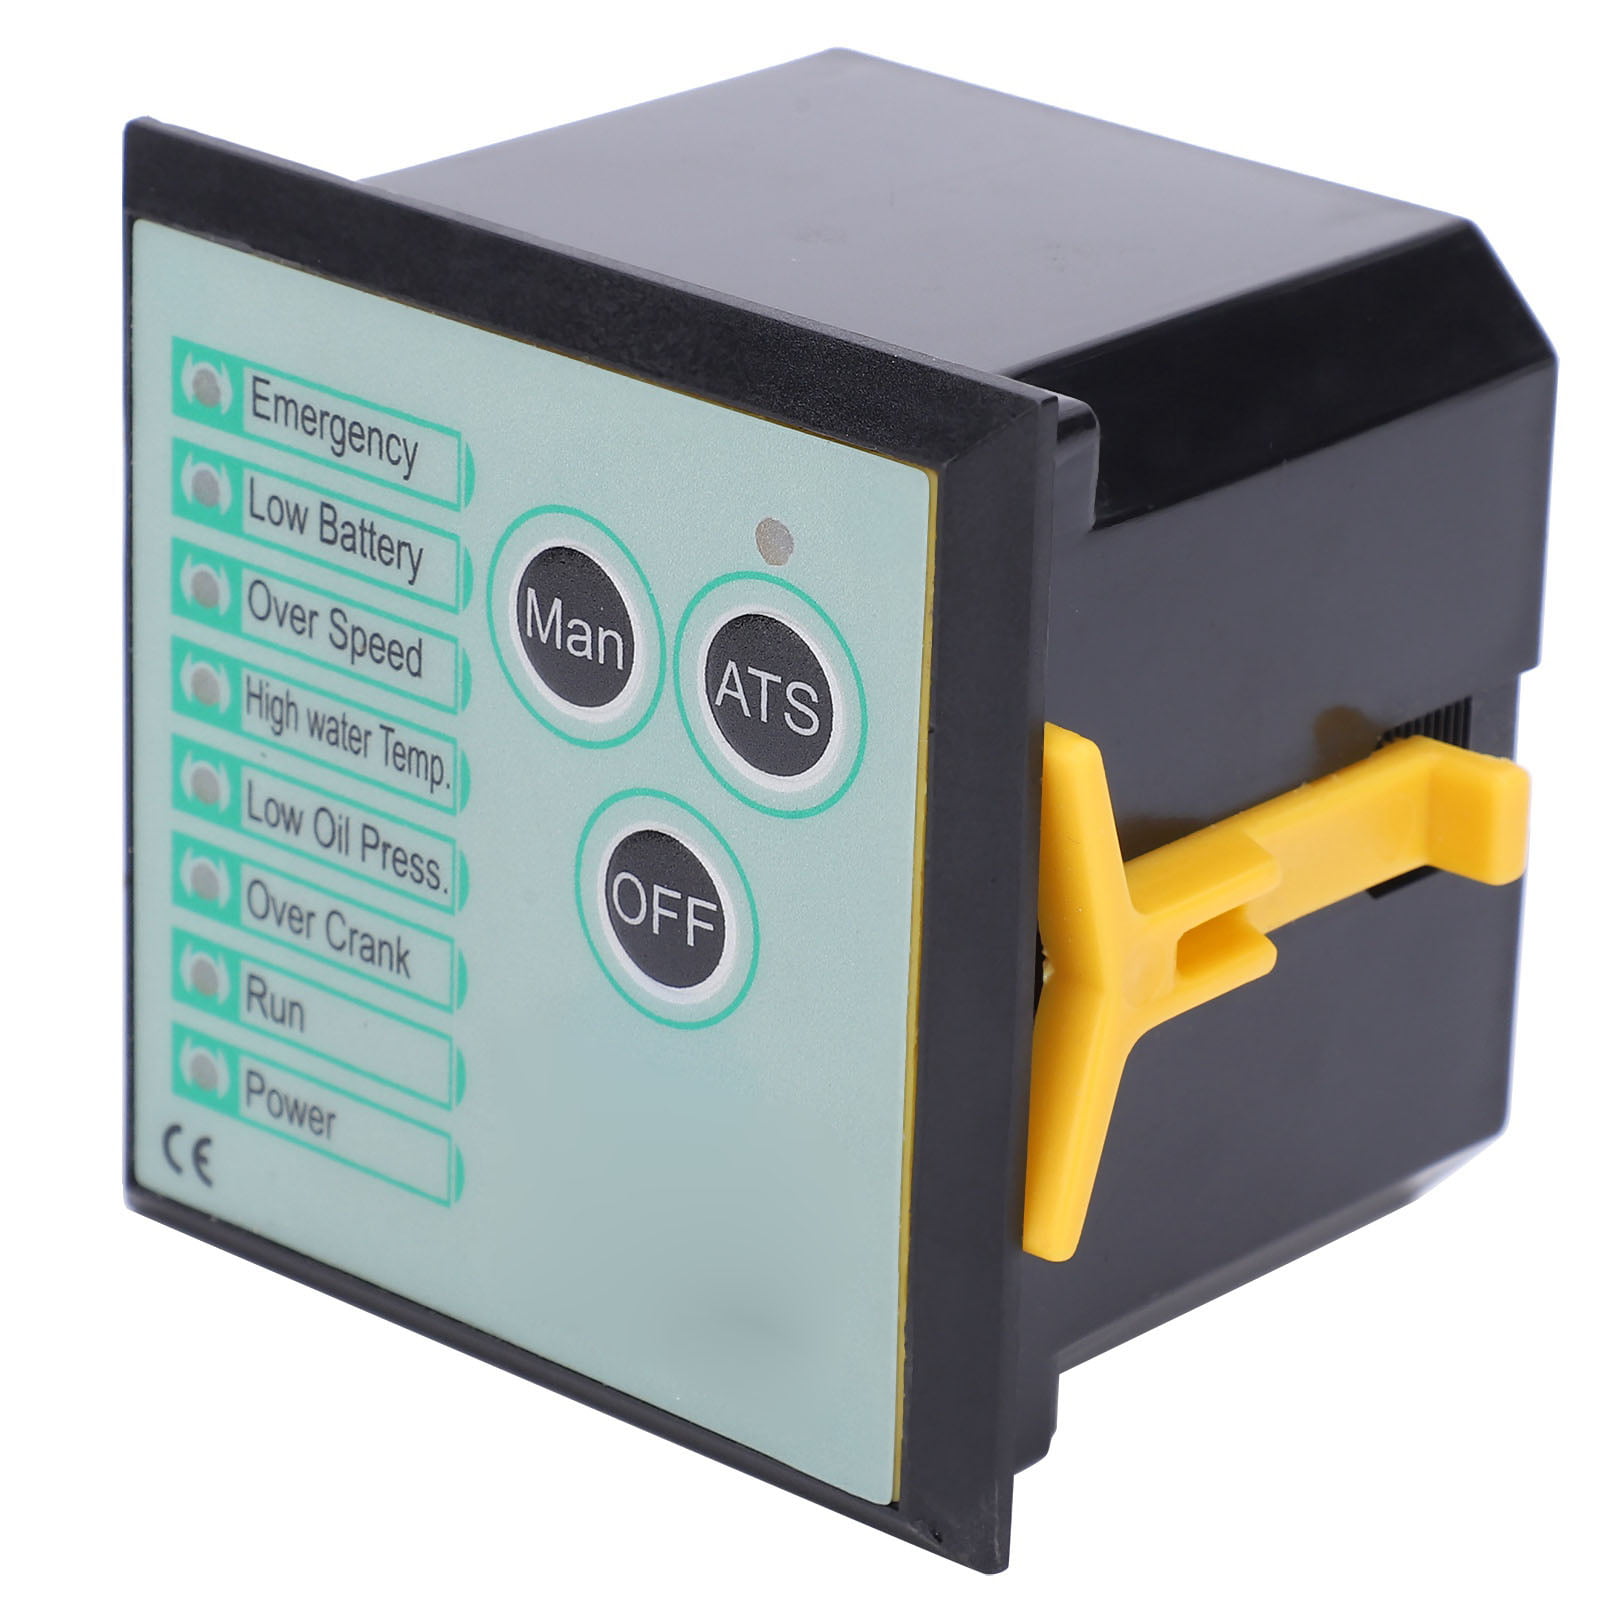 Set Generator Remote Control MCU Reliable For Industry - Walmart.com